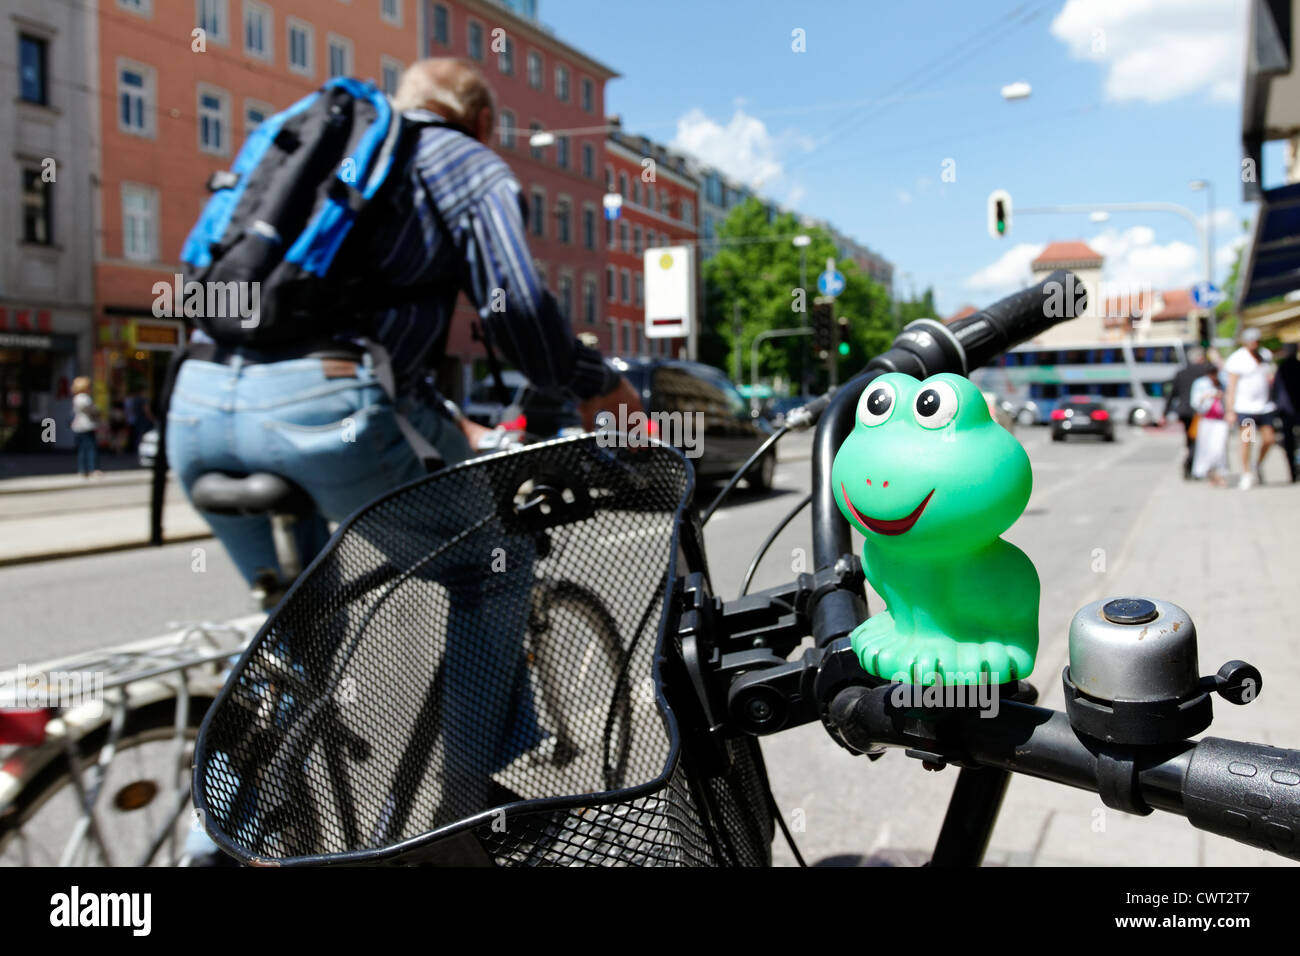 Green rubber mascot on bike handle bars, Munich Upper Bavaria Germany Stock Photo